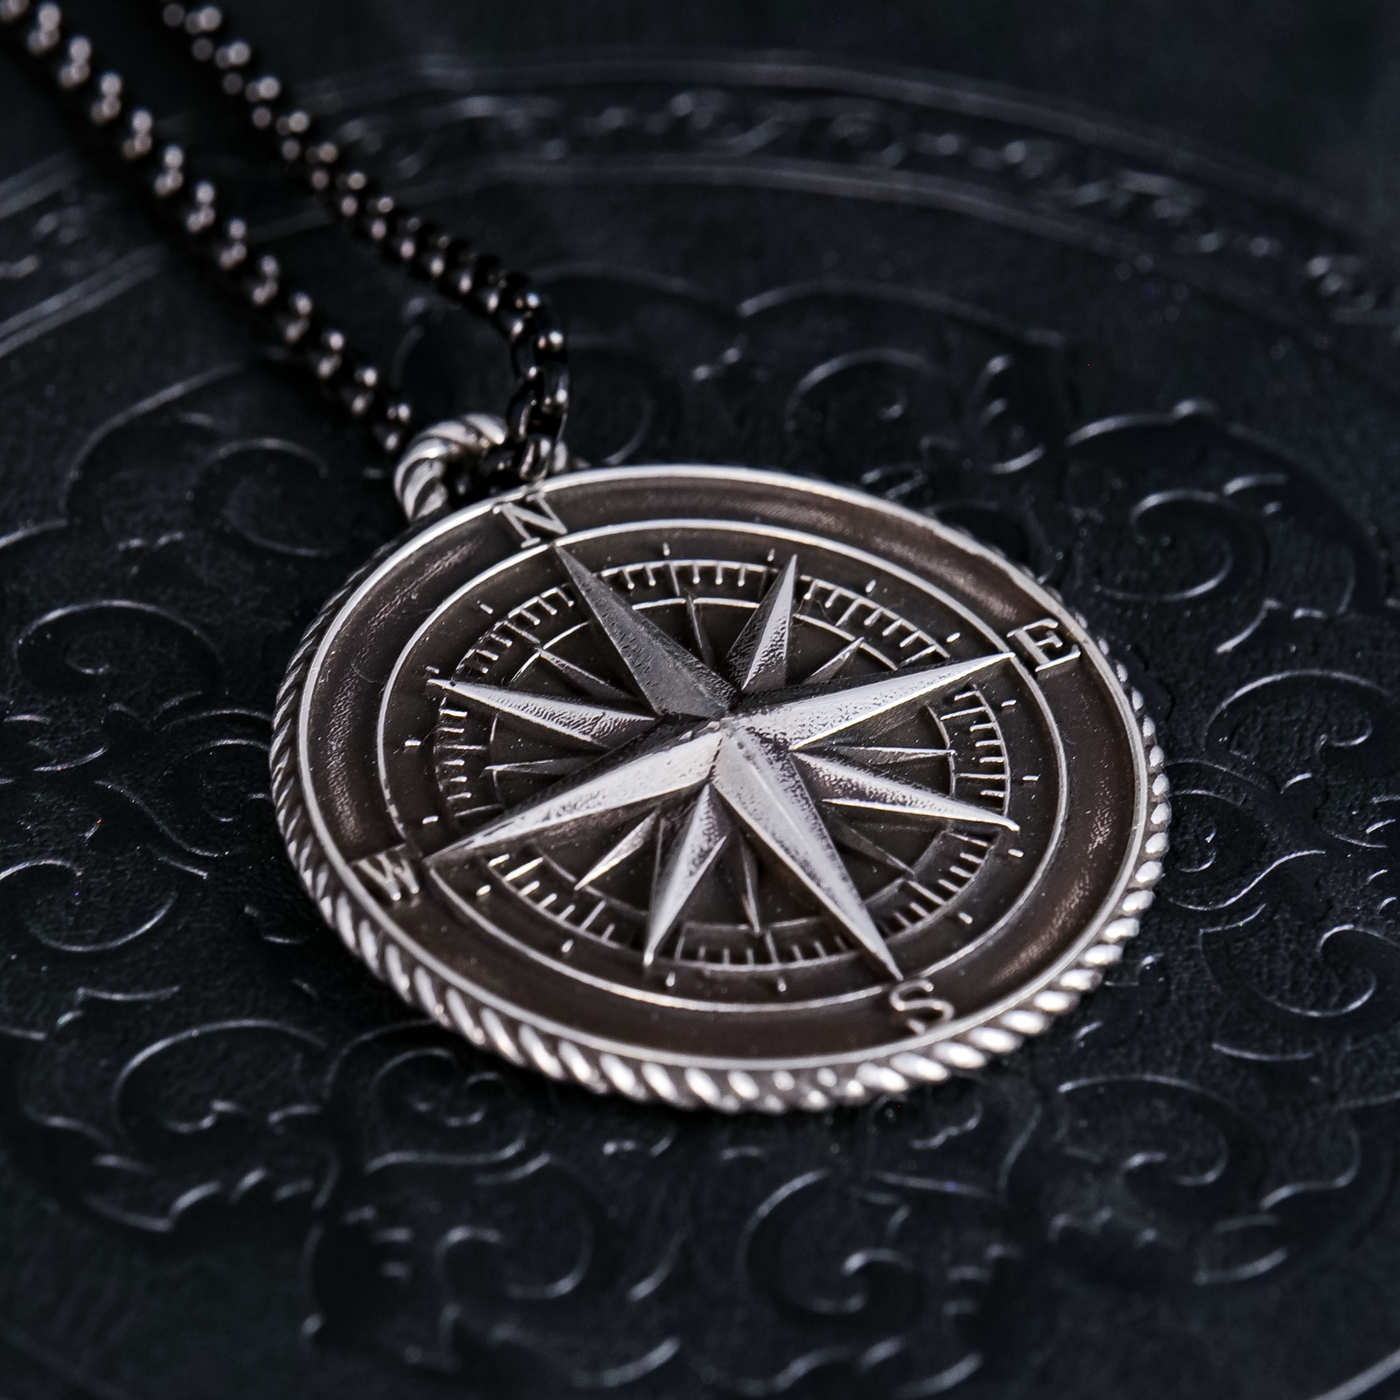 Sterling Silver Compass Pendant - Patrick Adair Designs